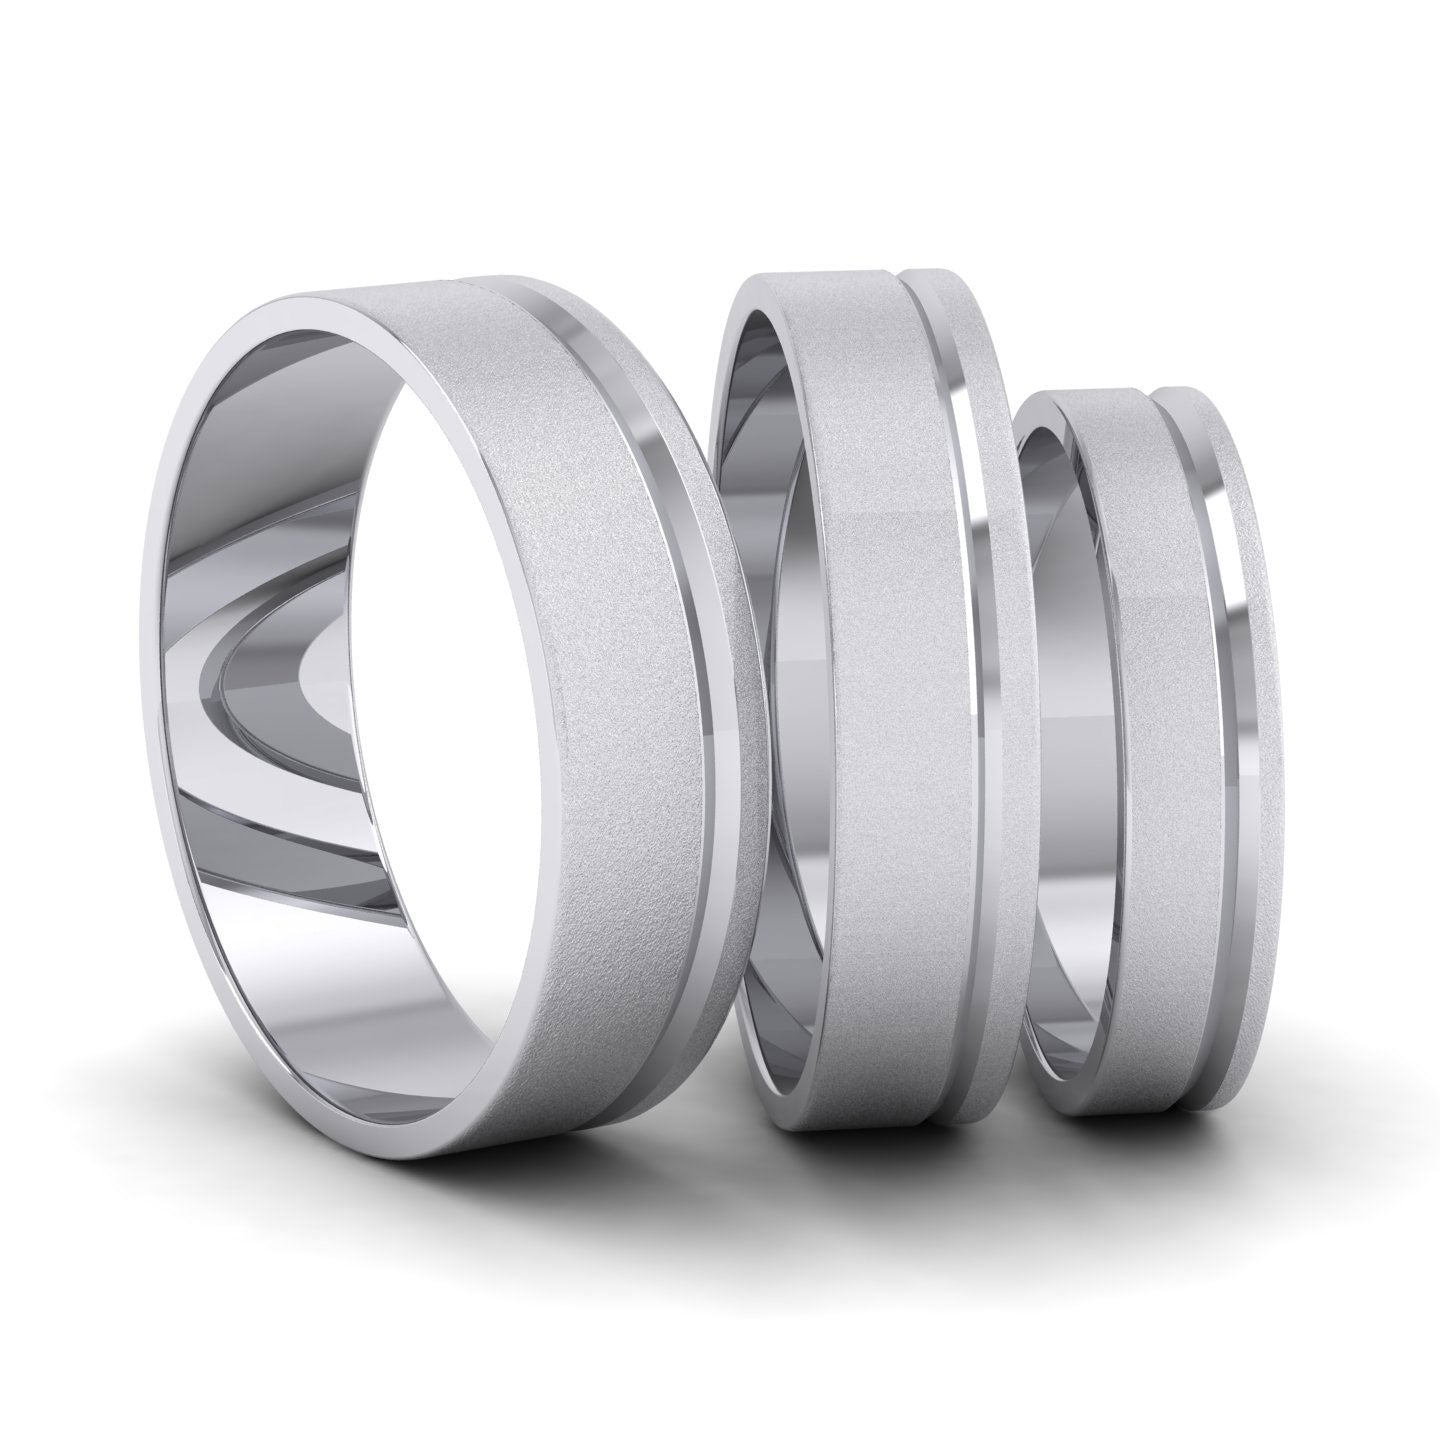 Asymmetric Line Pattern 950 Palladium 5mm Flat Wedding Ring